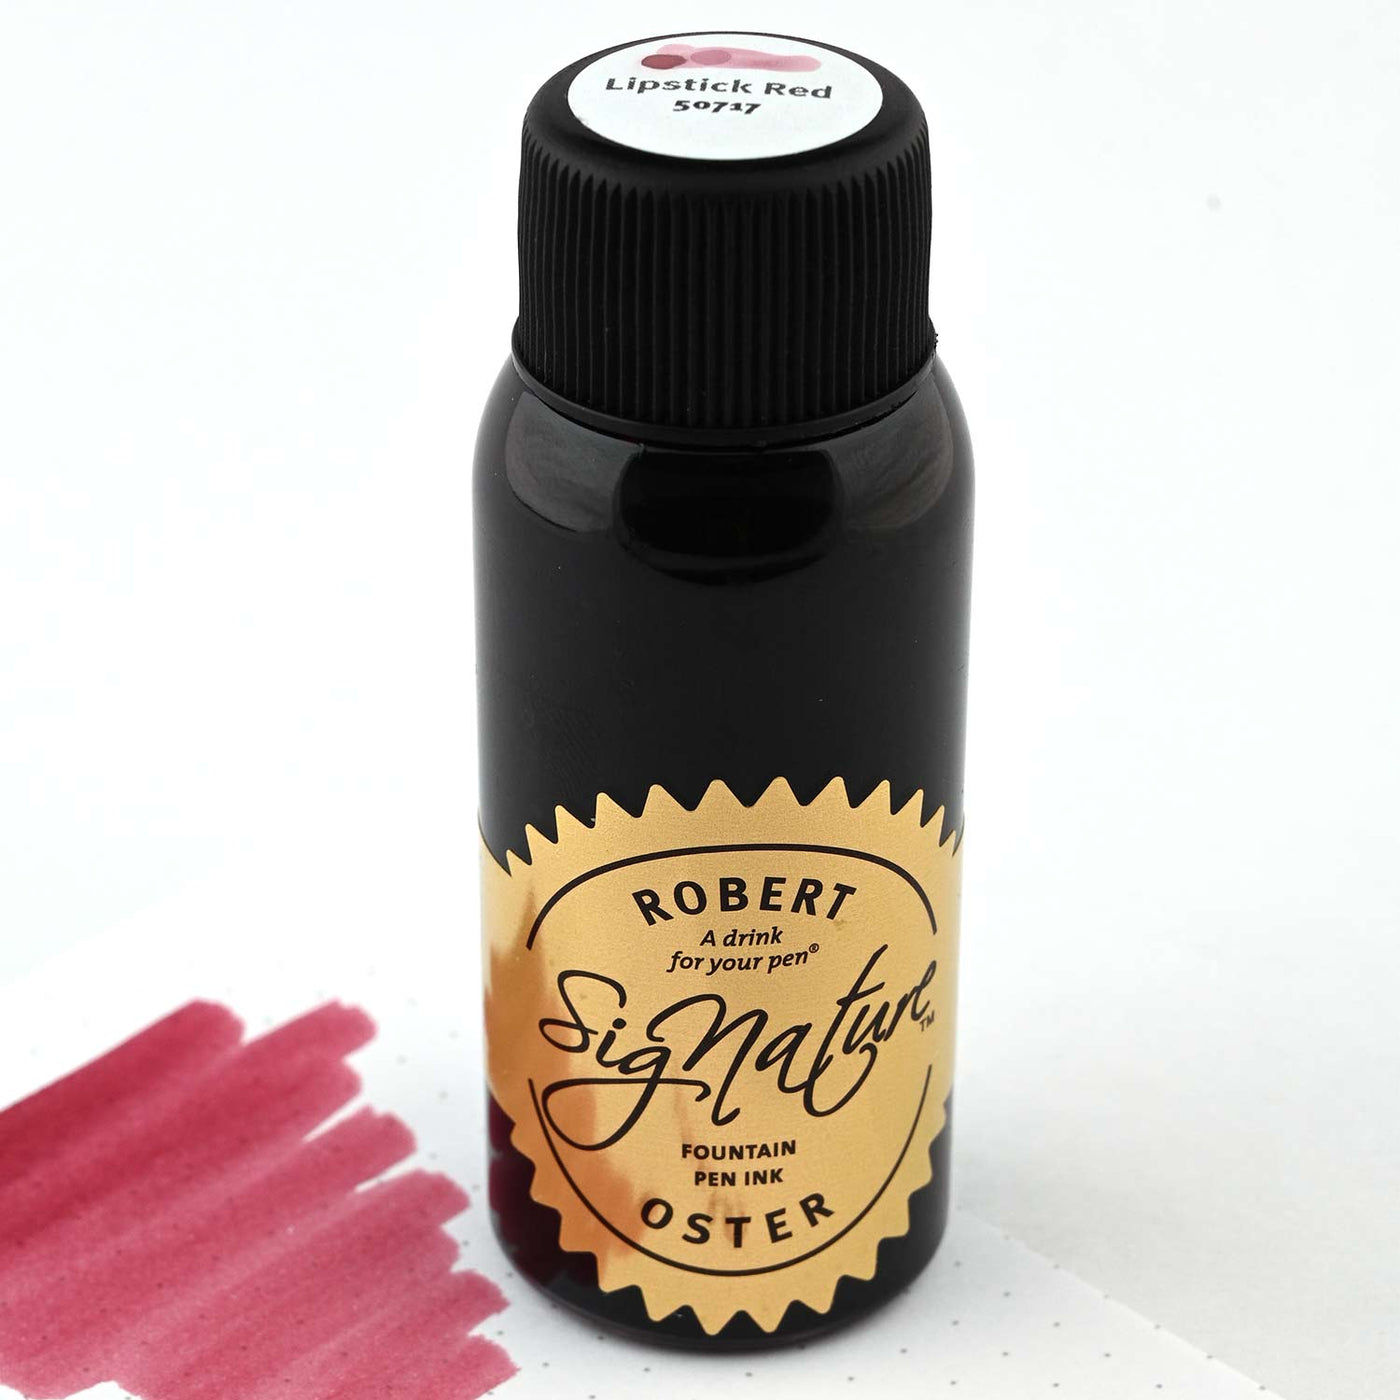 Robert Oster Signature Ink Lipstick Red - 50ml 5